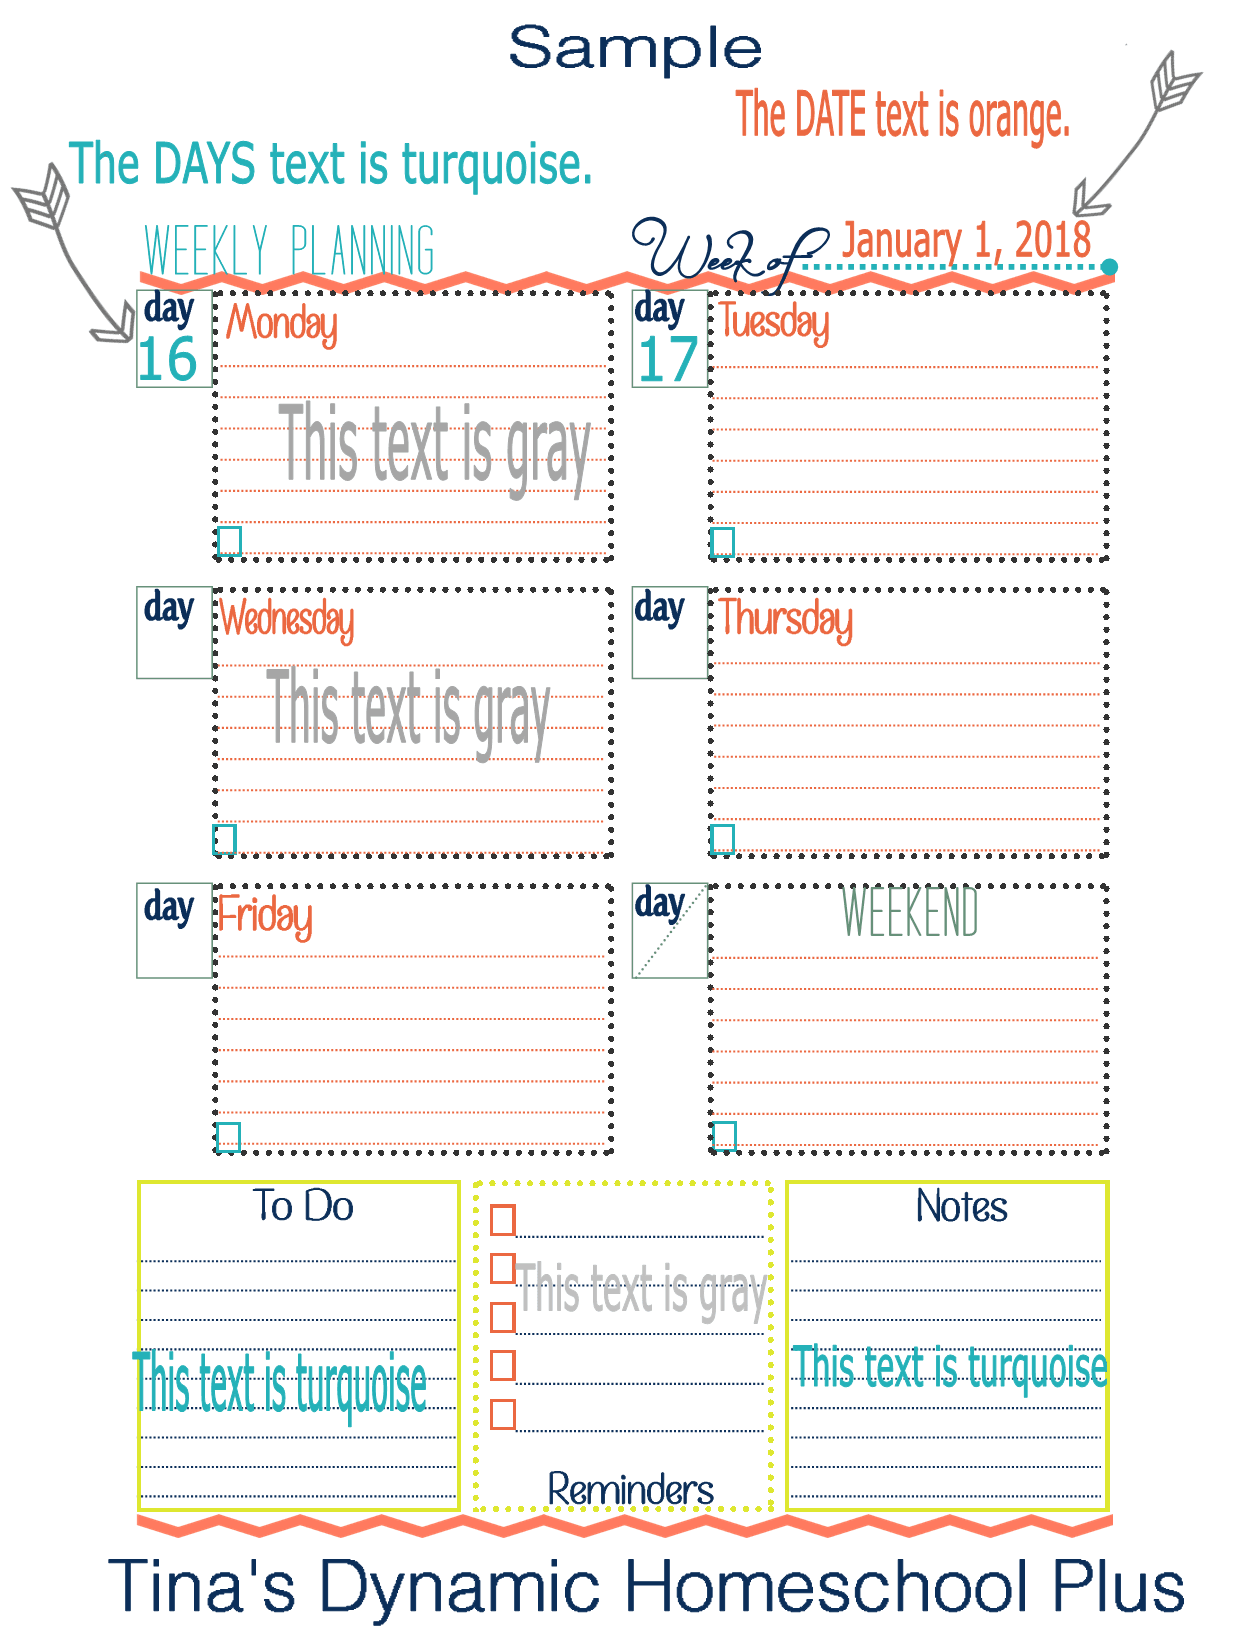 Weekly Planning General 2 - sample editable @ Tina's Dynamic Homeschool Plus